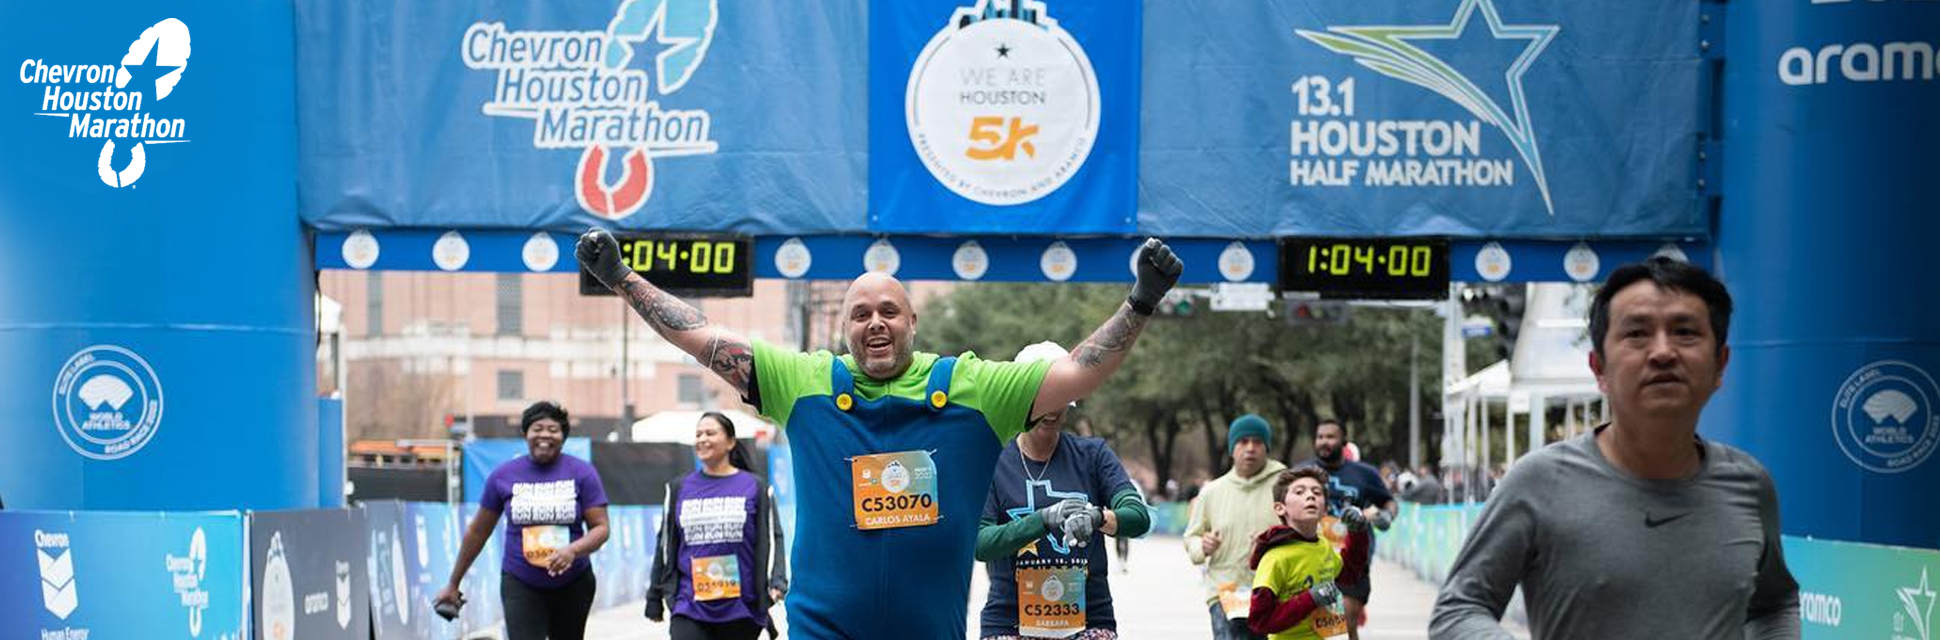 Houston Marathon